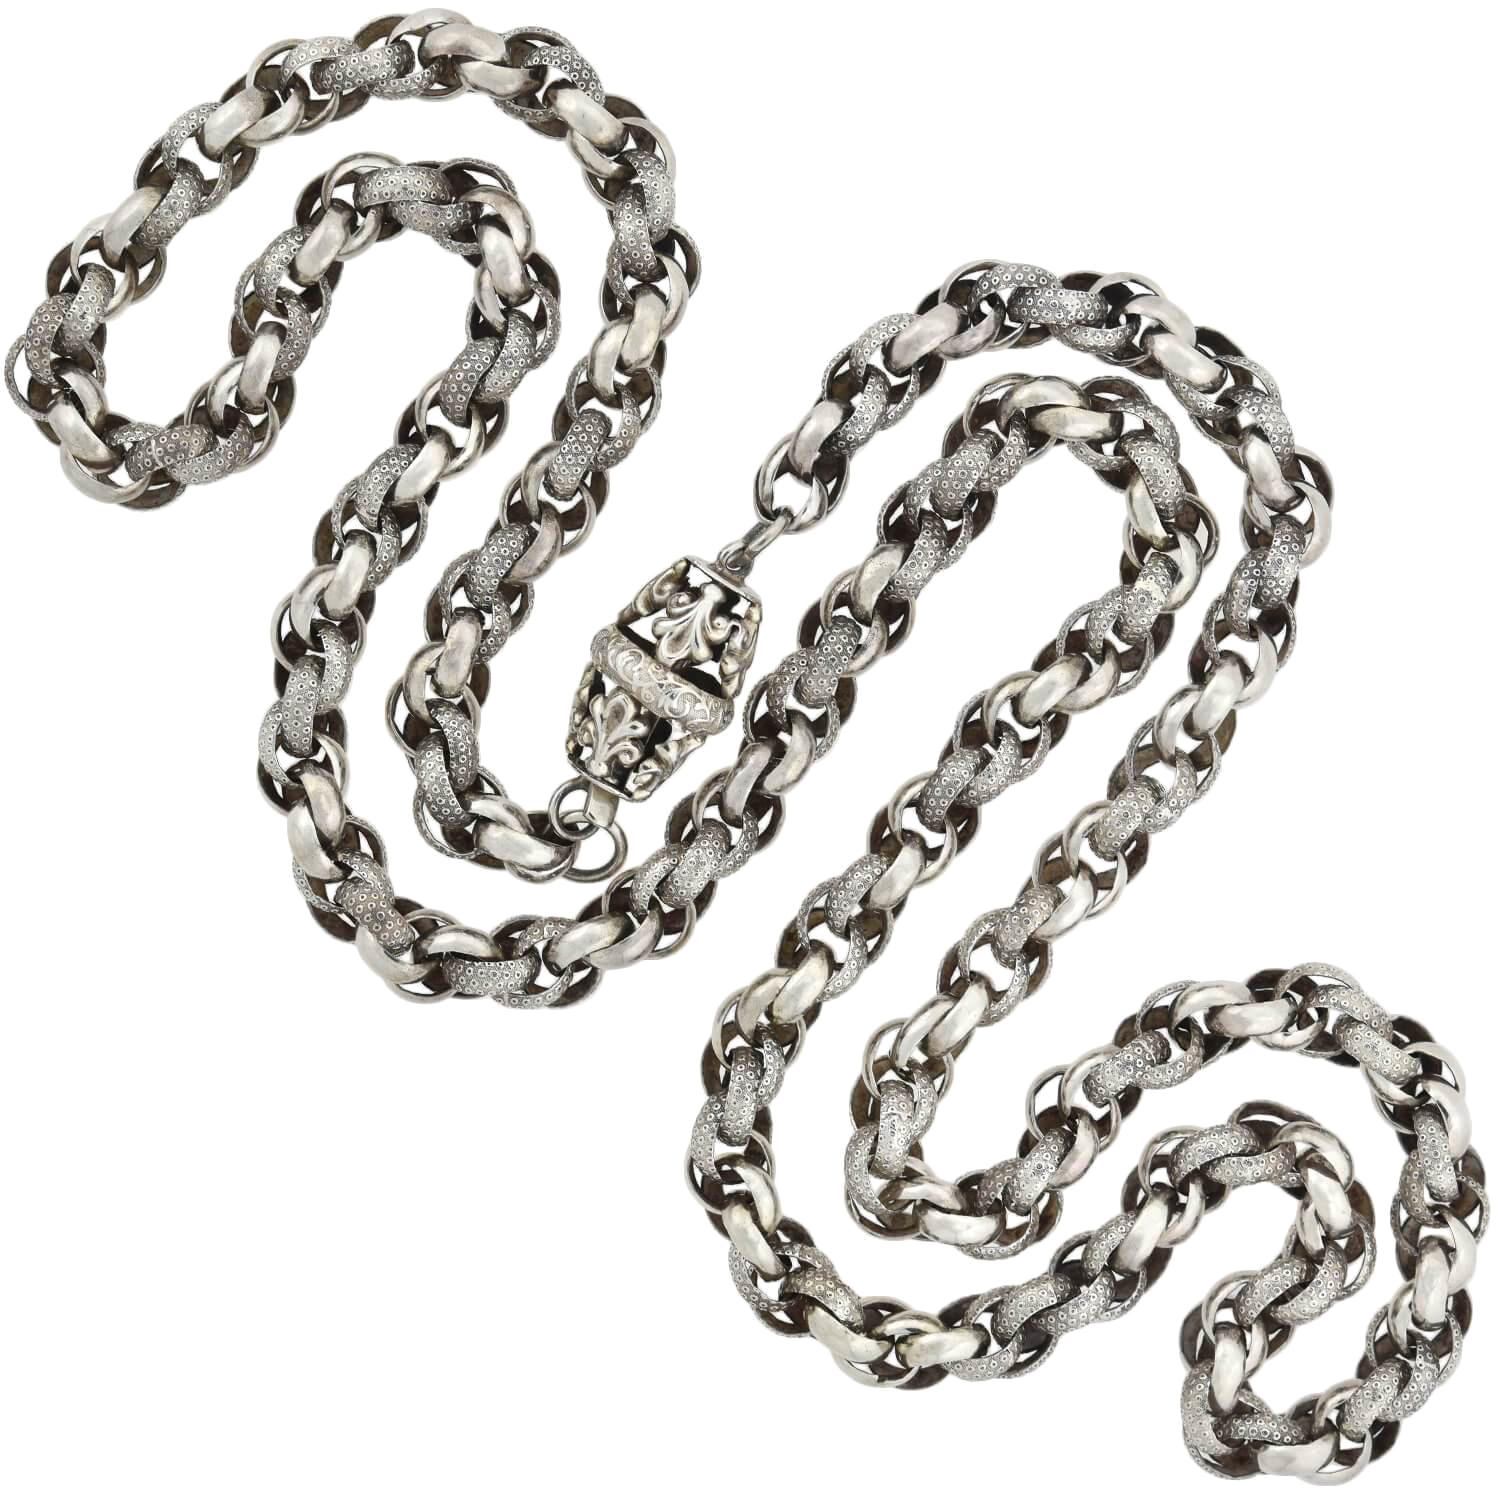 Georgian Handmade Textured Link Chain Necklace